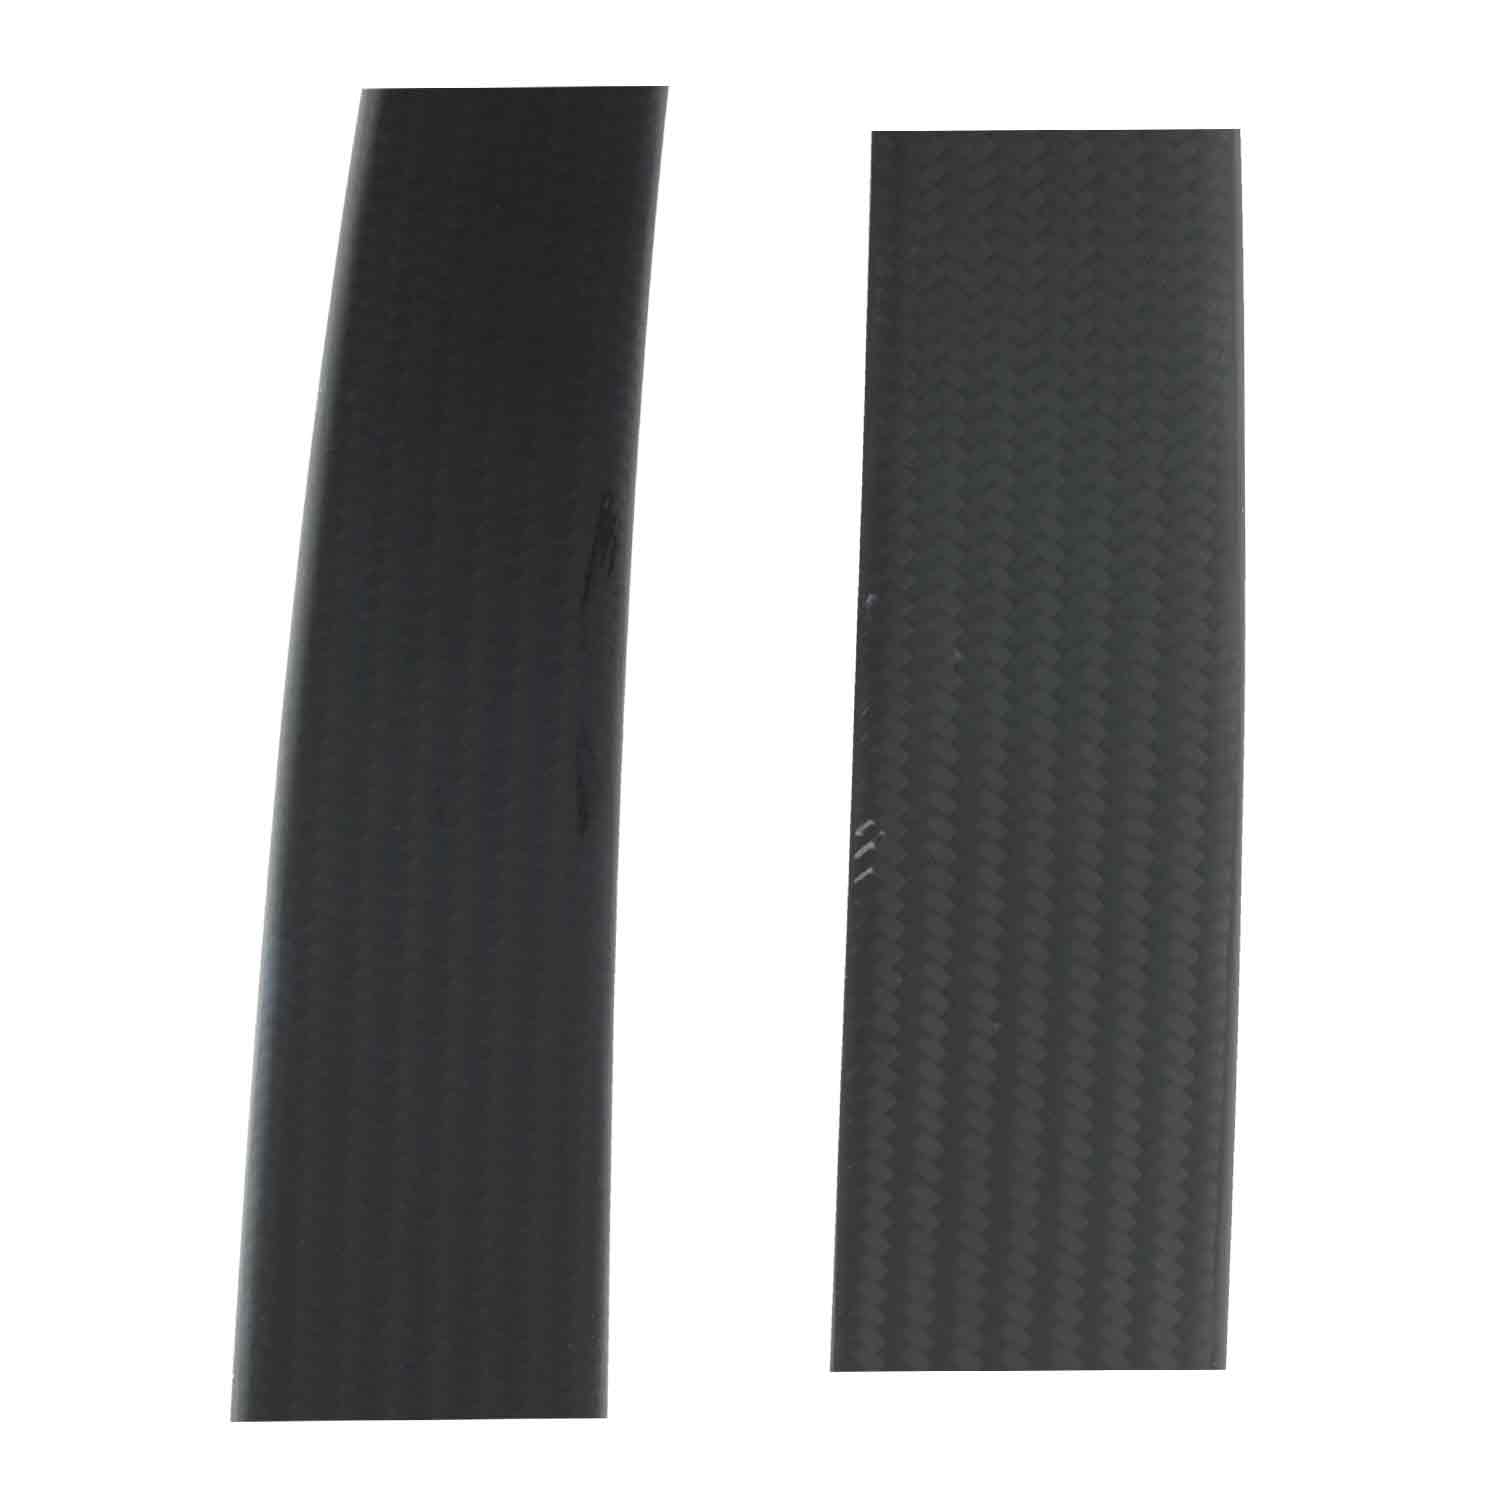 Uukha Sx50 Monolith Carbon ILF Recurve Limbs (open box x1036841)